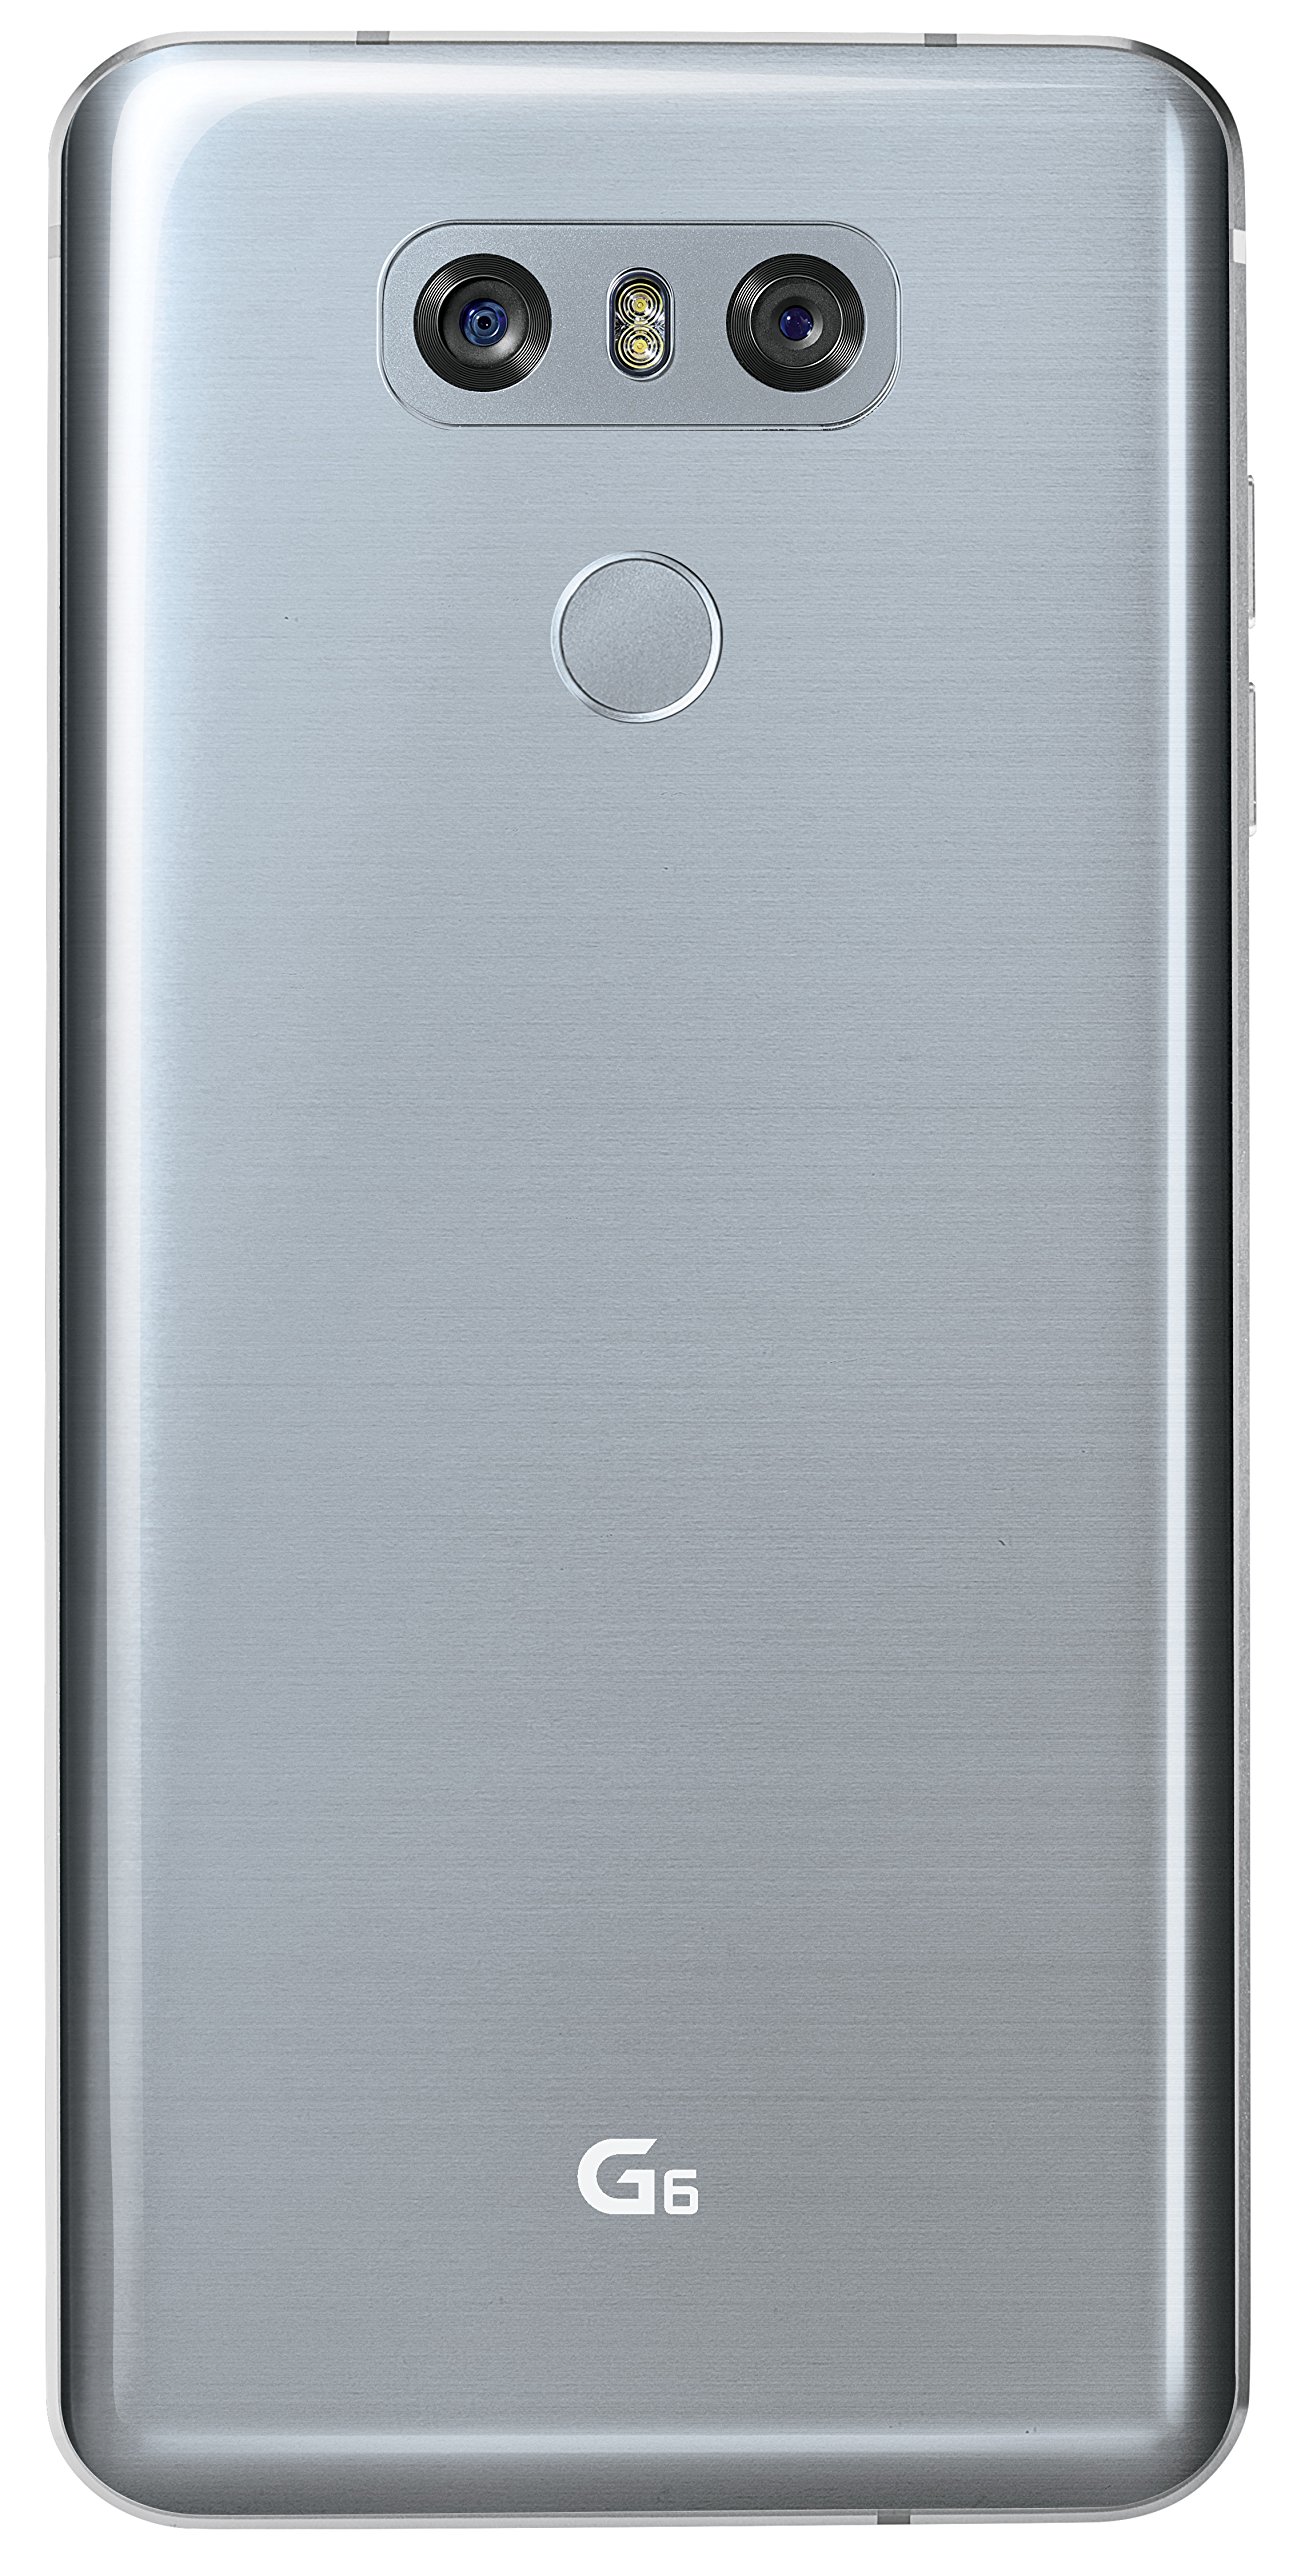 LG G6 - 32 GB - Unlocked GSM - Platinum